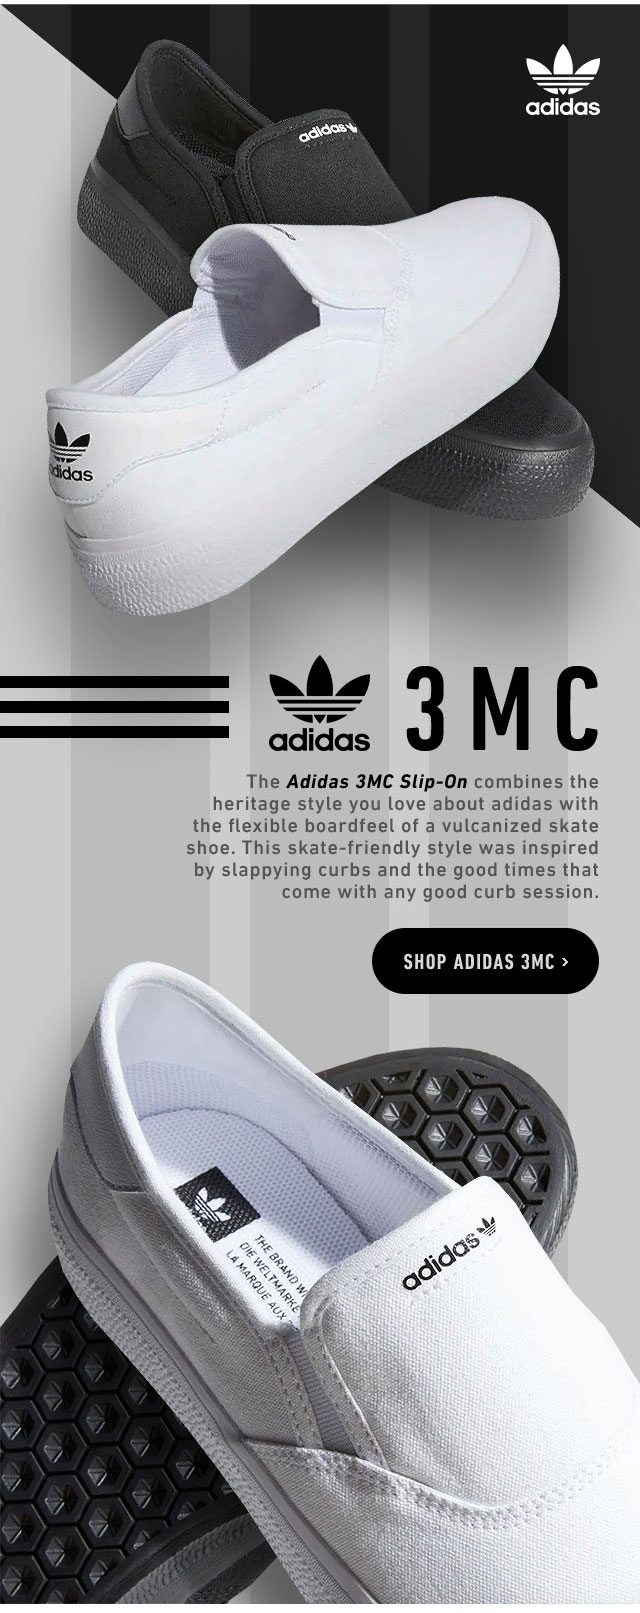 adidas 3mc slip on shoes